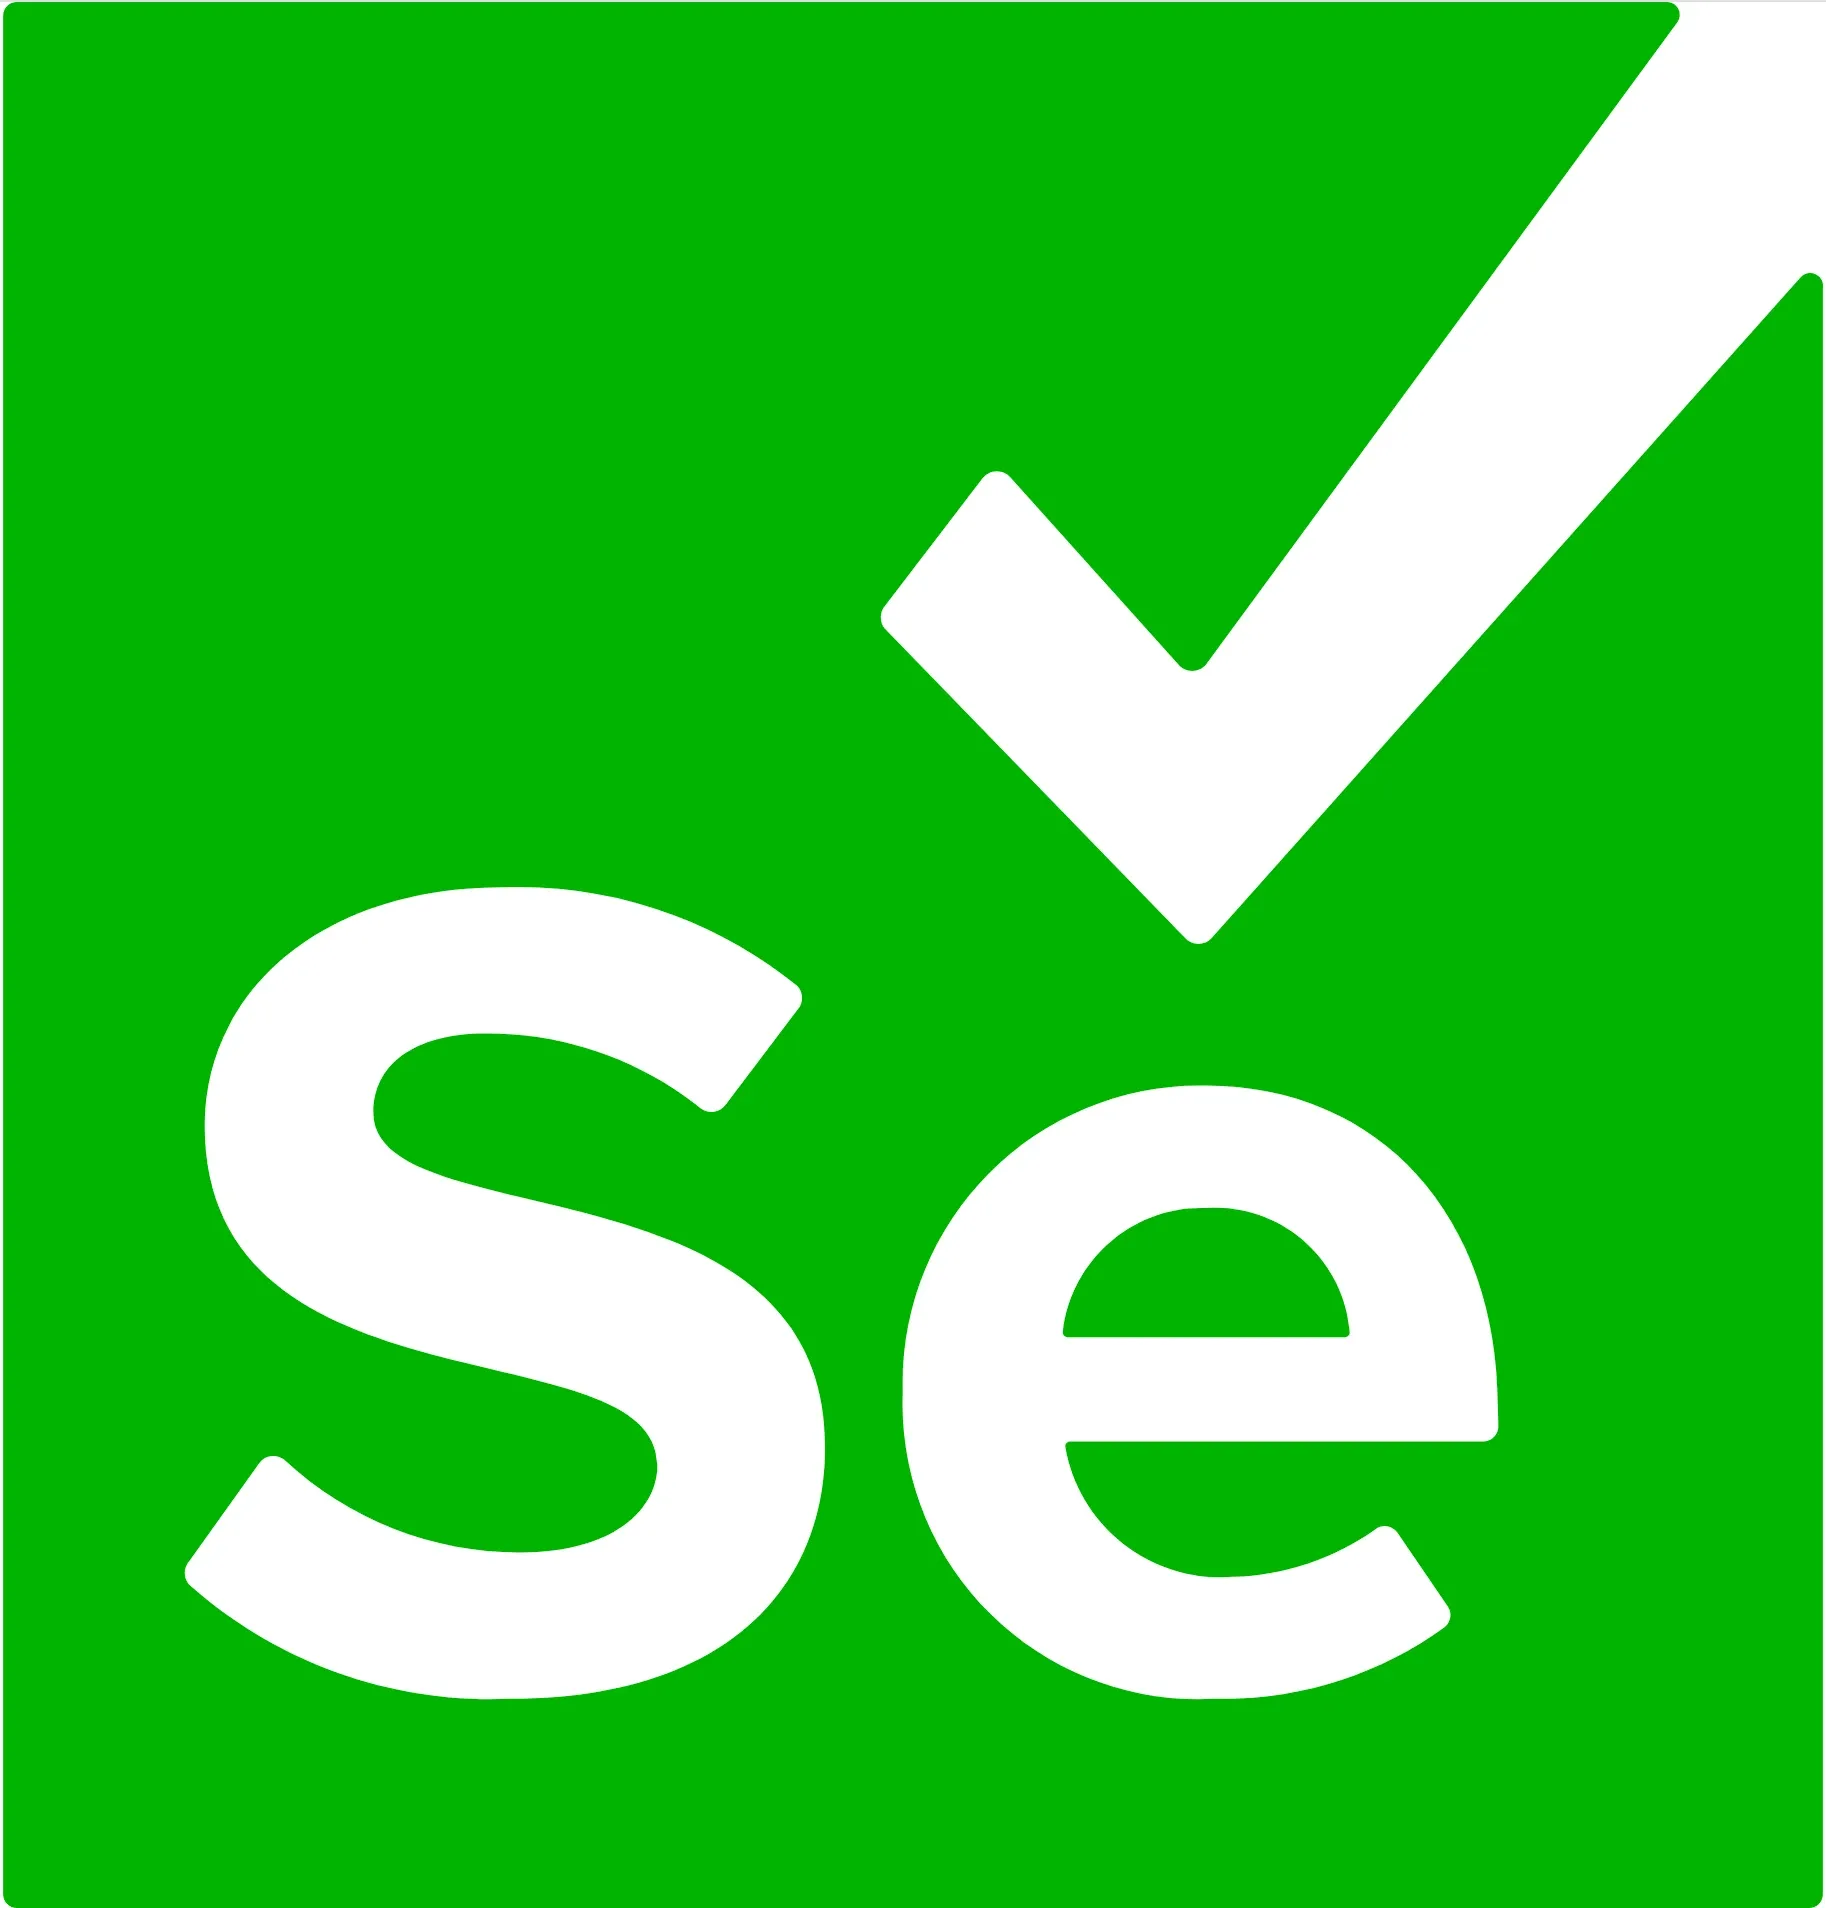 Selenium automation testing tool